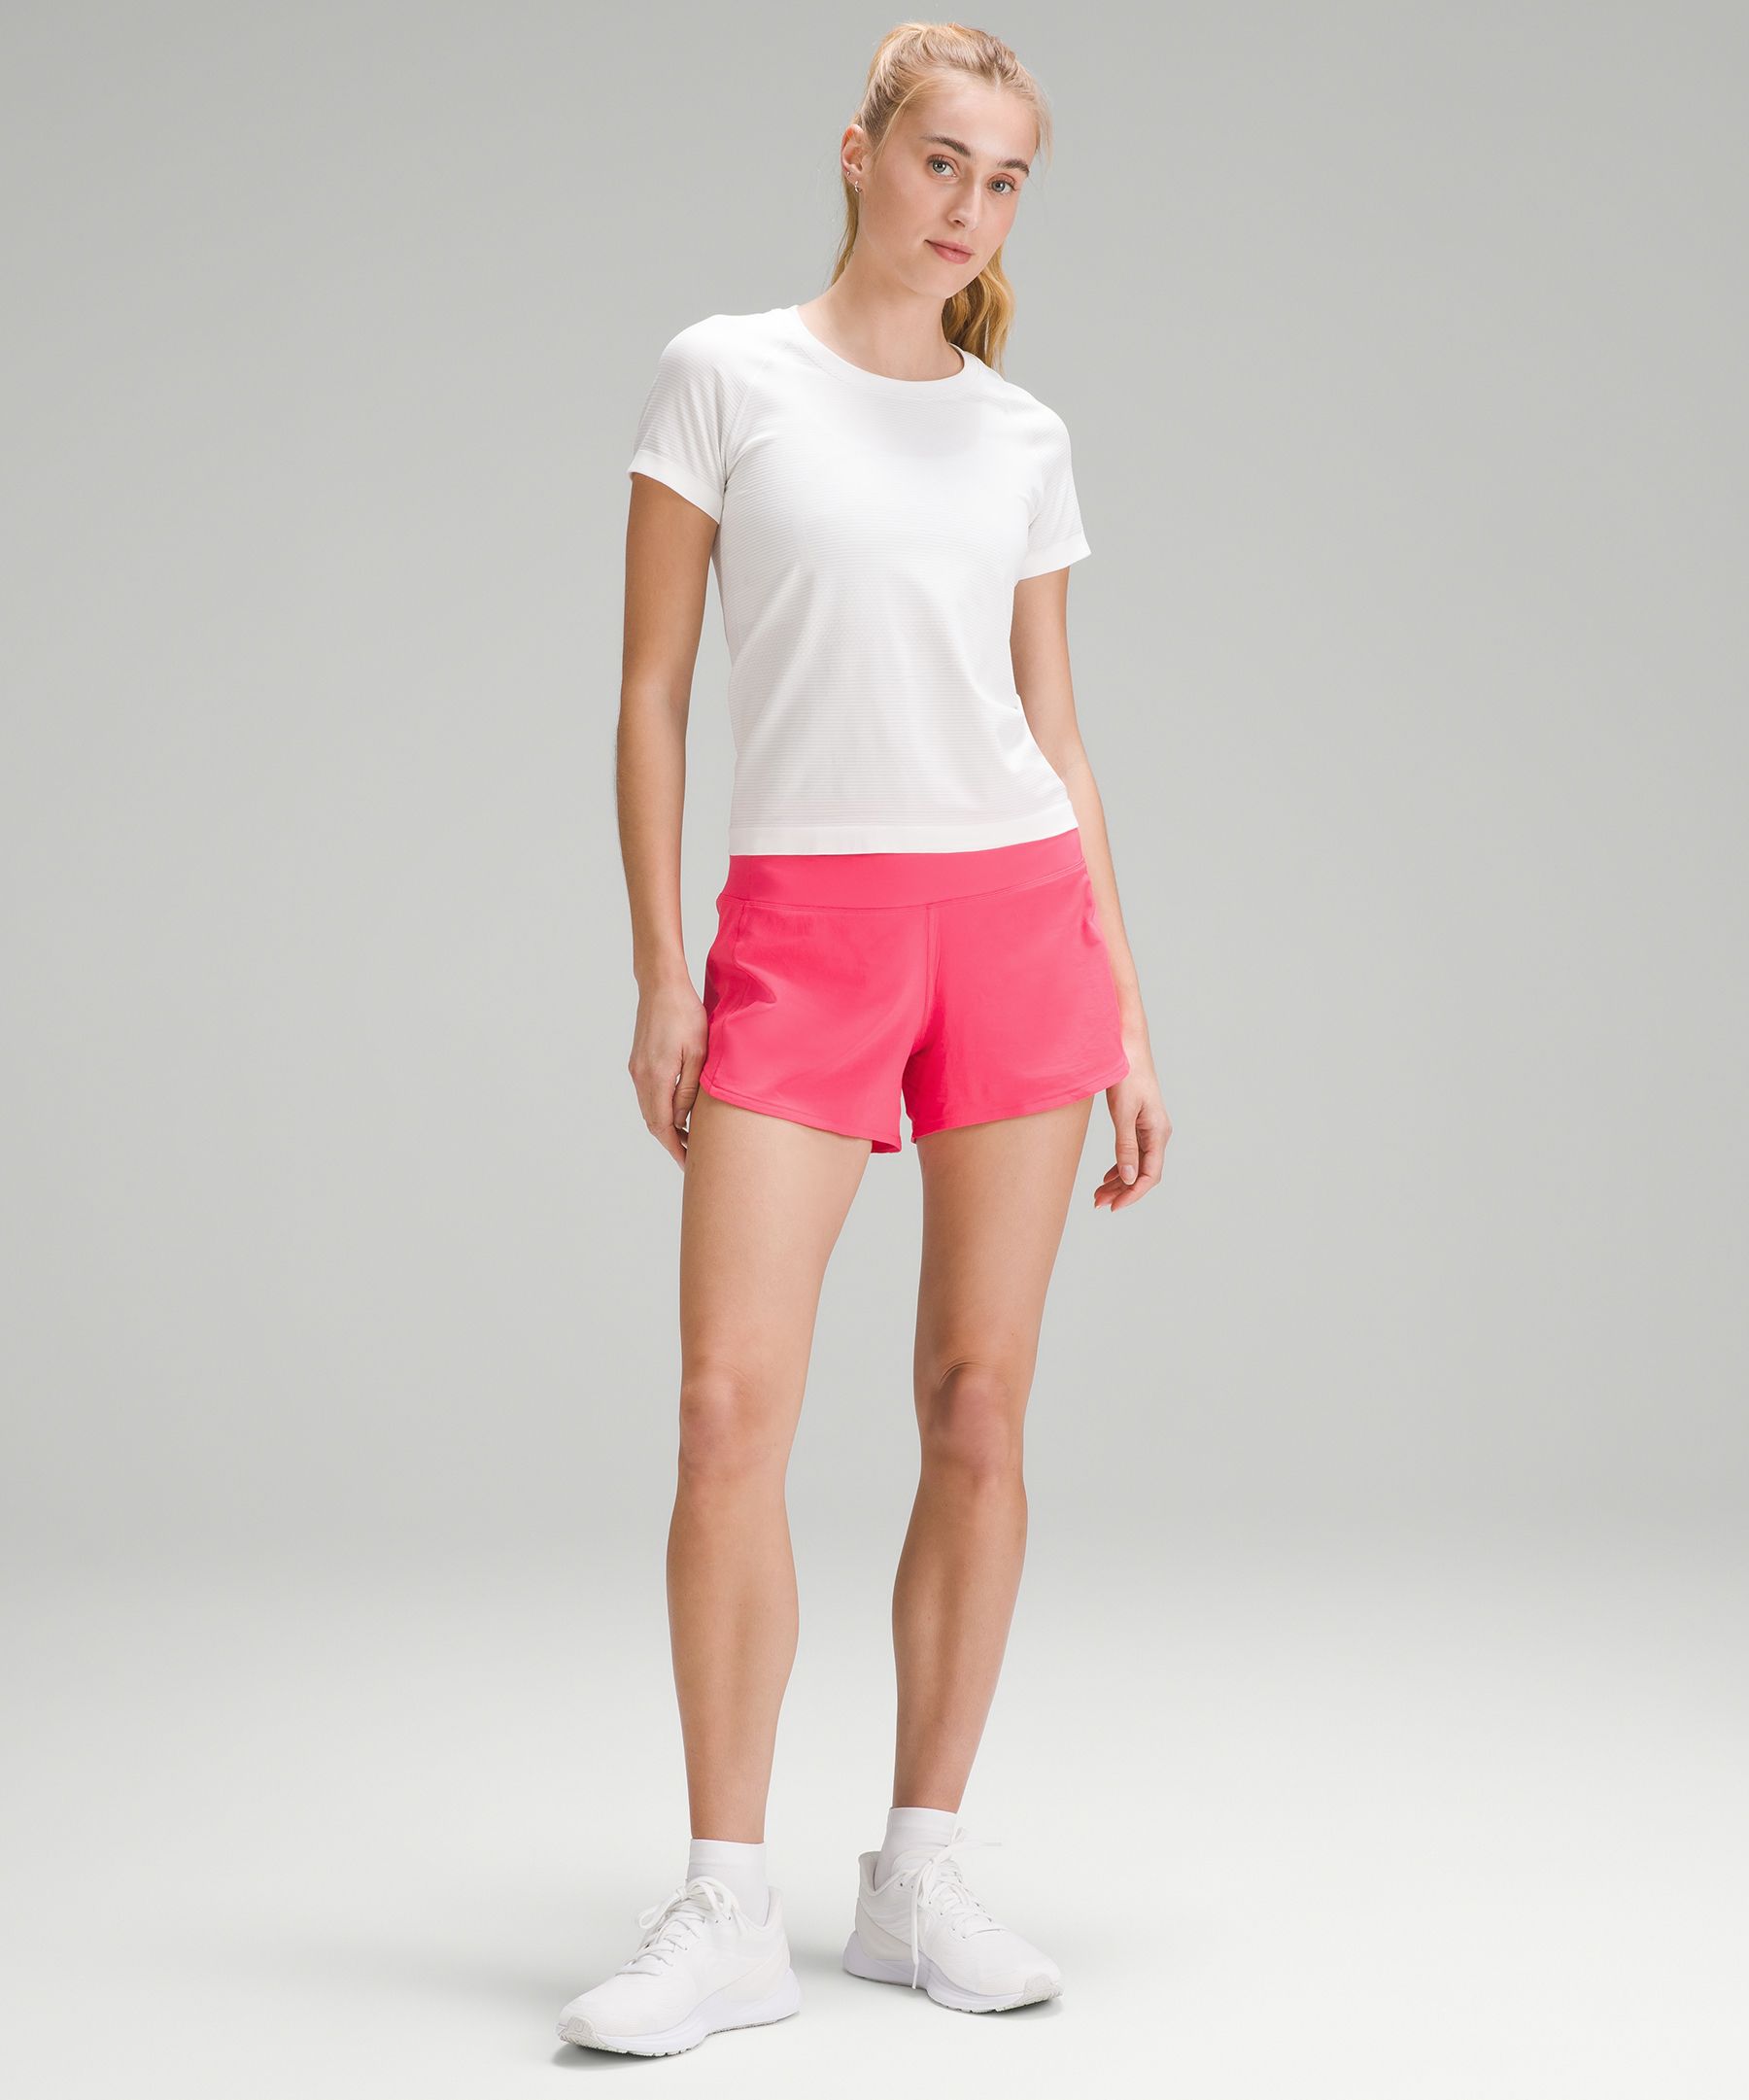 eczipvz Workout Shorts Women's Plaid Print Elastic High Waist Wide Leg  Casual Shorts Hot Pink,M 